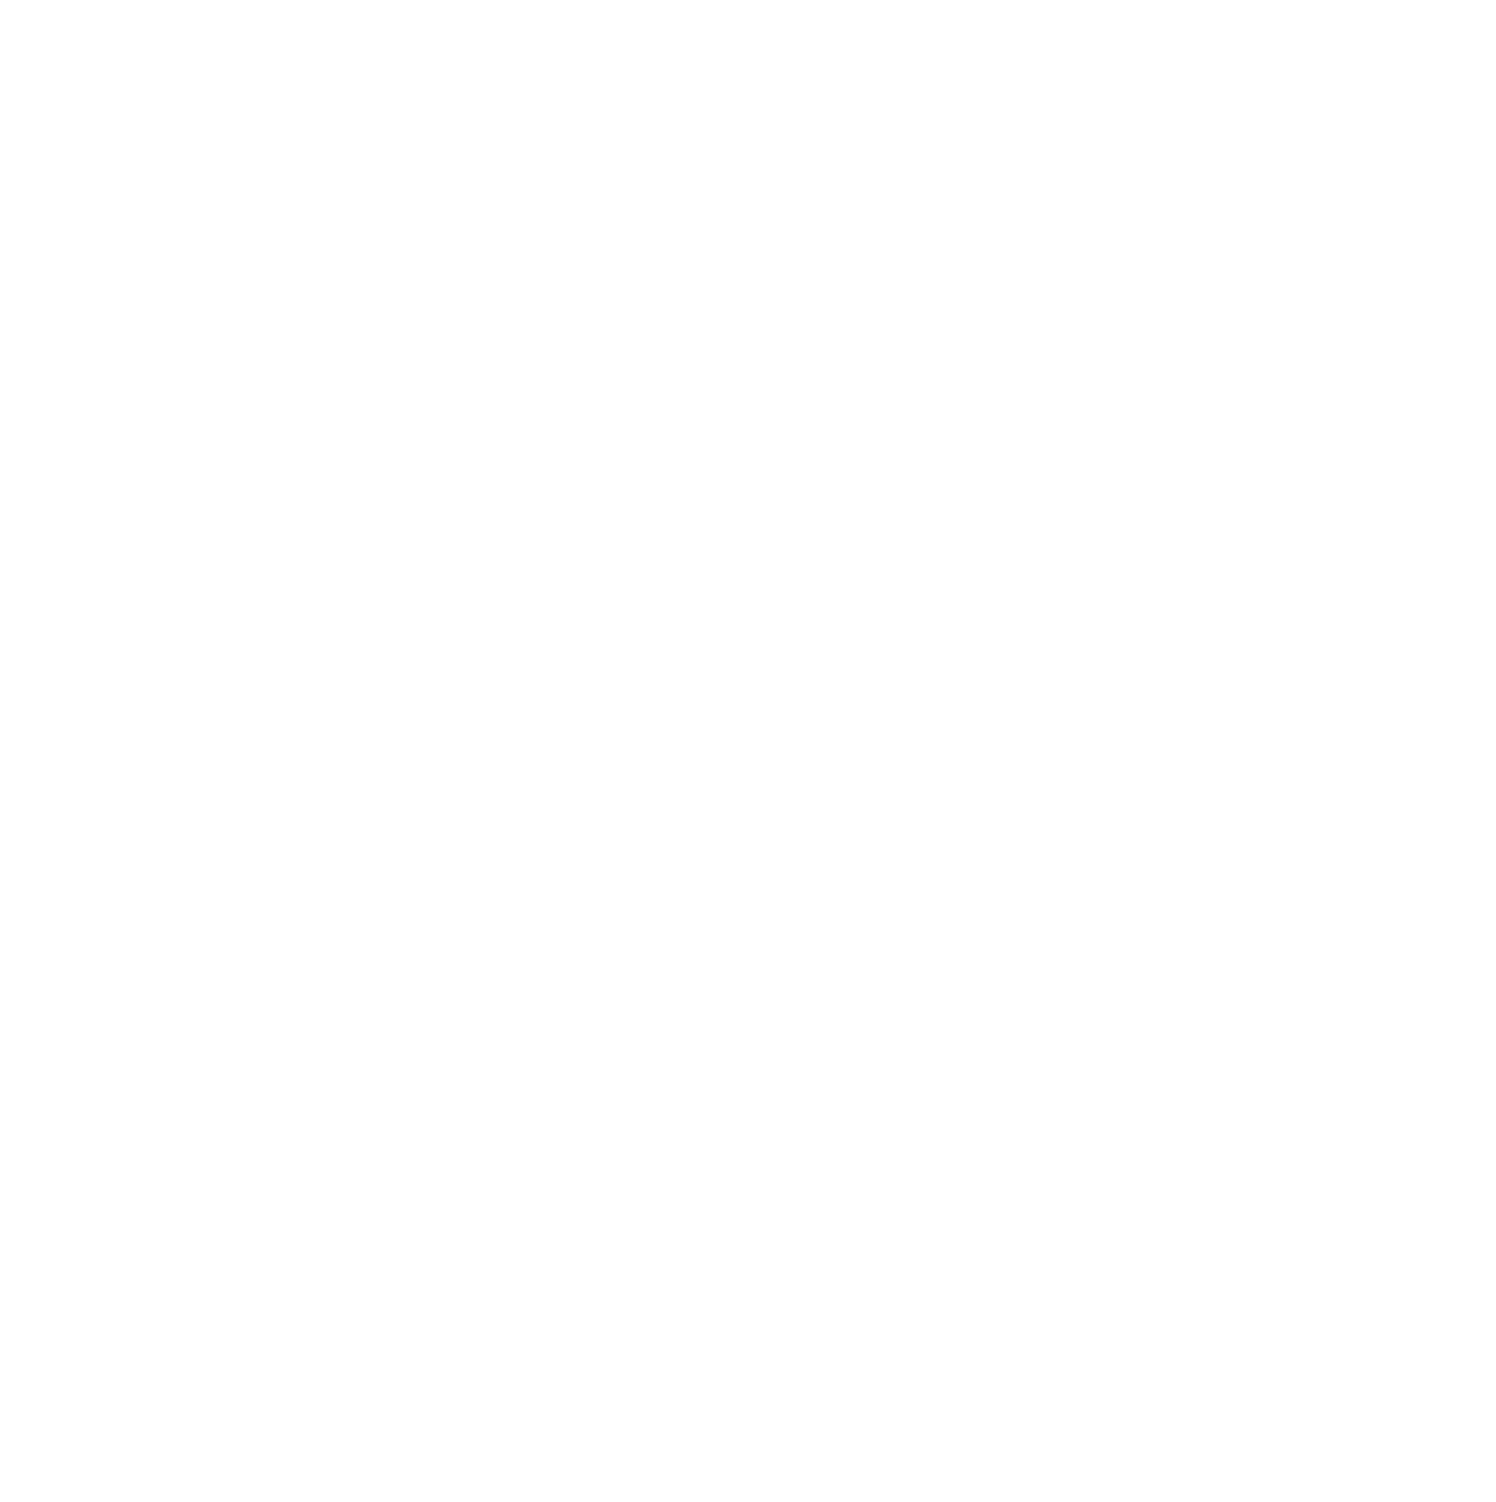 Qatar General Insurance & Reinsurance Company logo pour fonds sombres (PNG transparent)